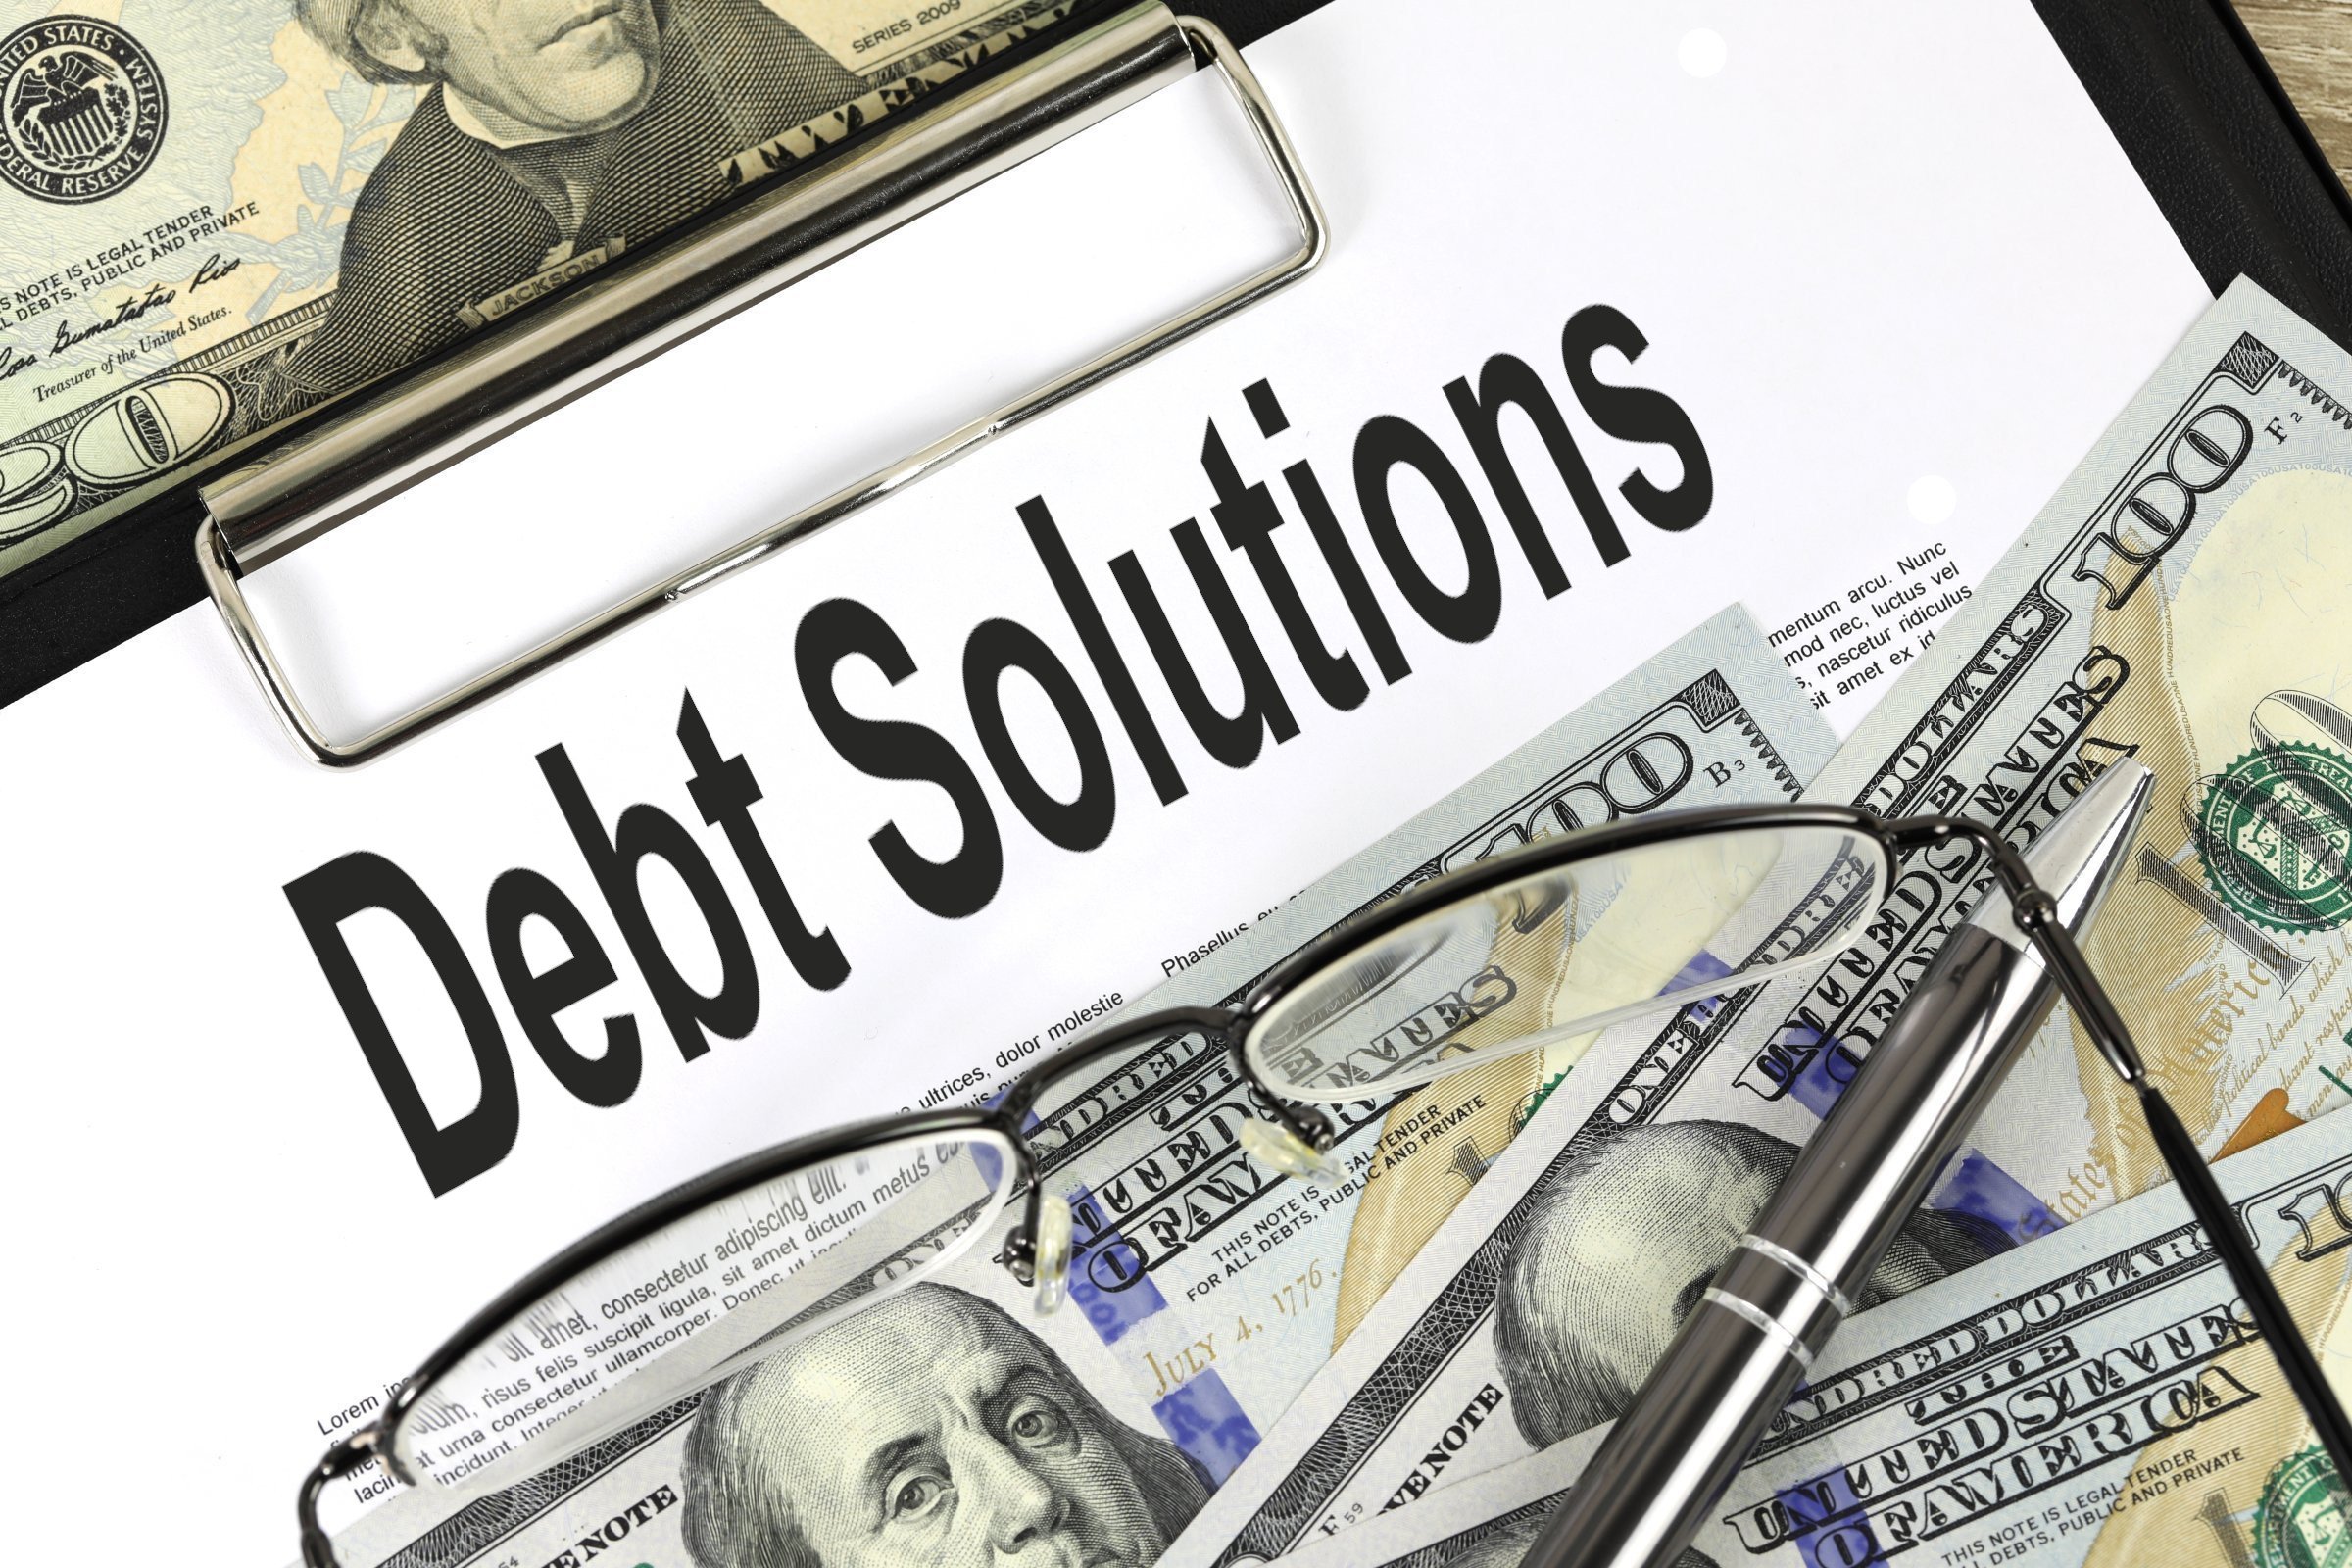 debt solutions